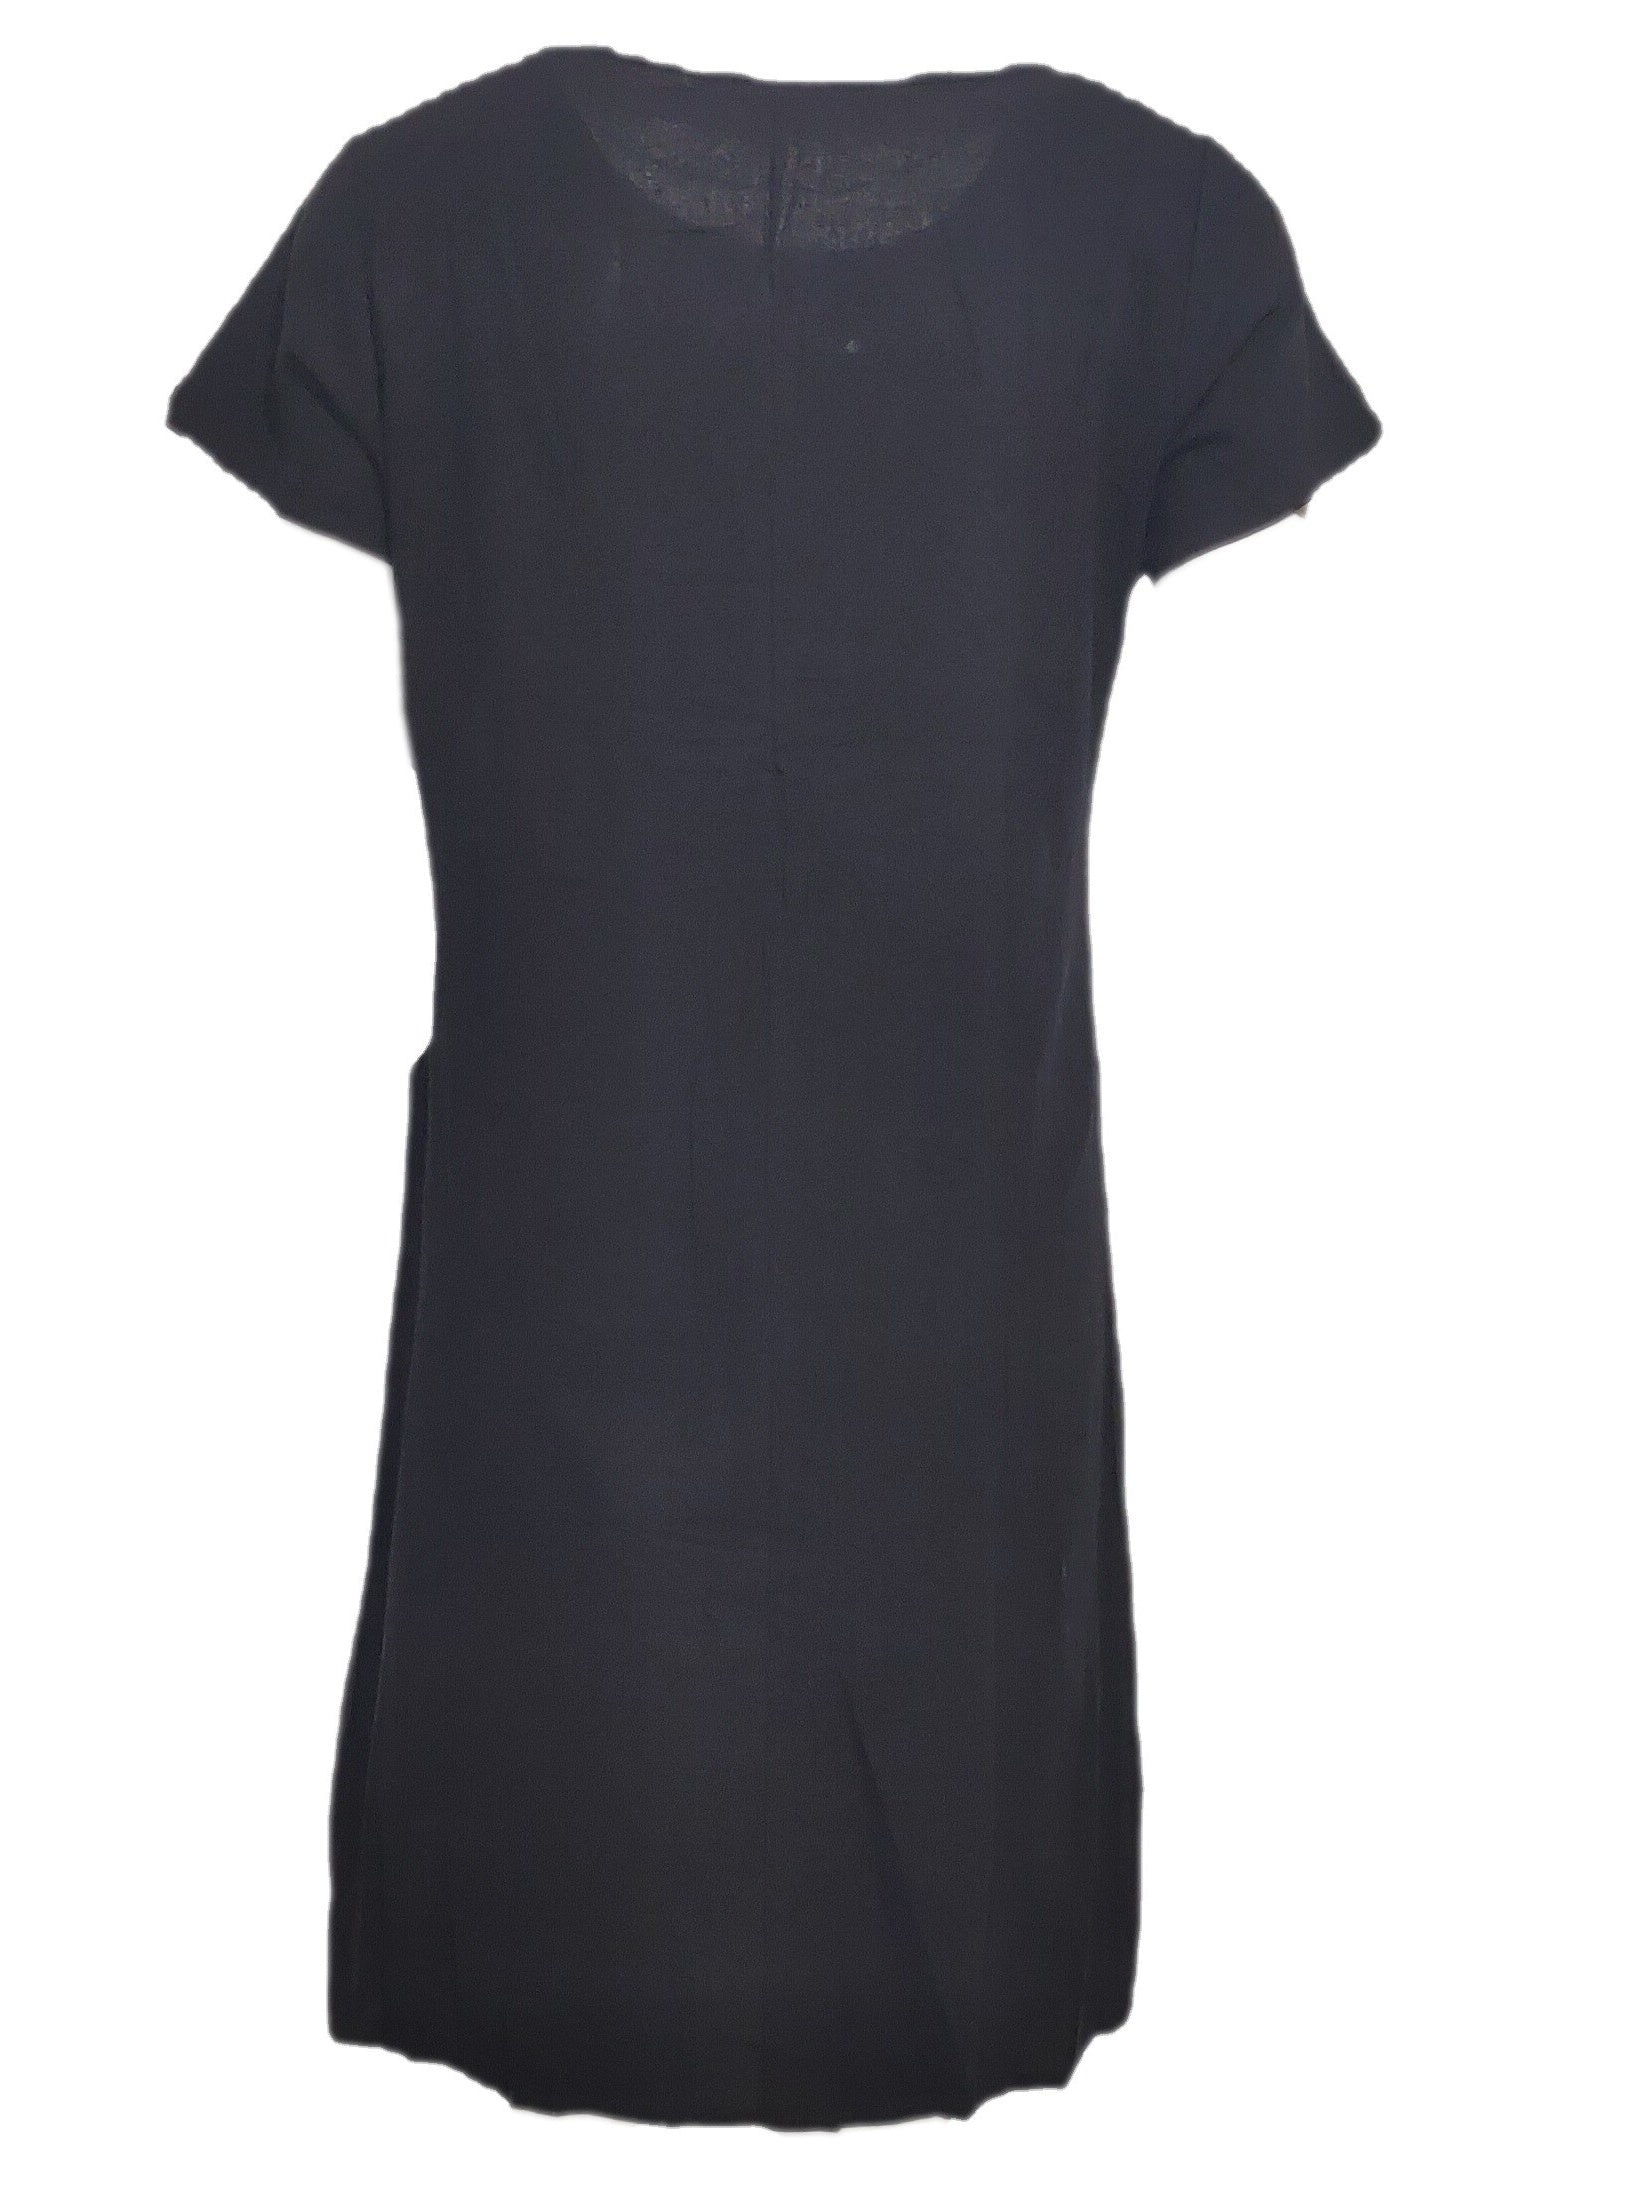 「lovevop」Round Neck Pocket Dress, Casual Loose Solid Short Sleeve Spring Summer Knee-Length Dresses, Women's Clothing